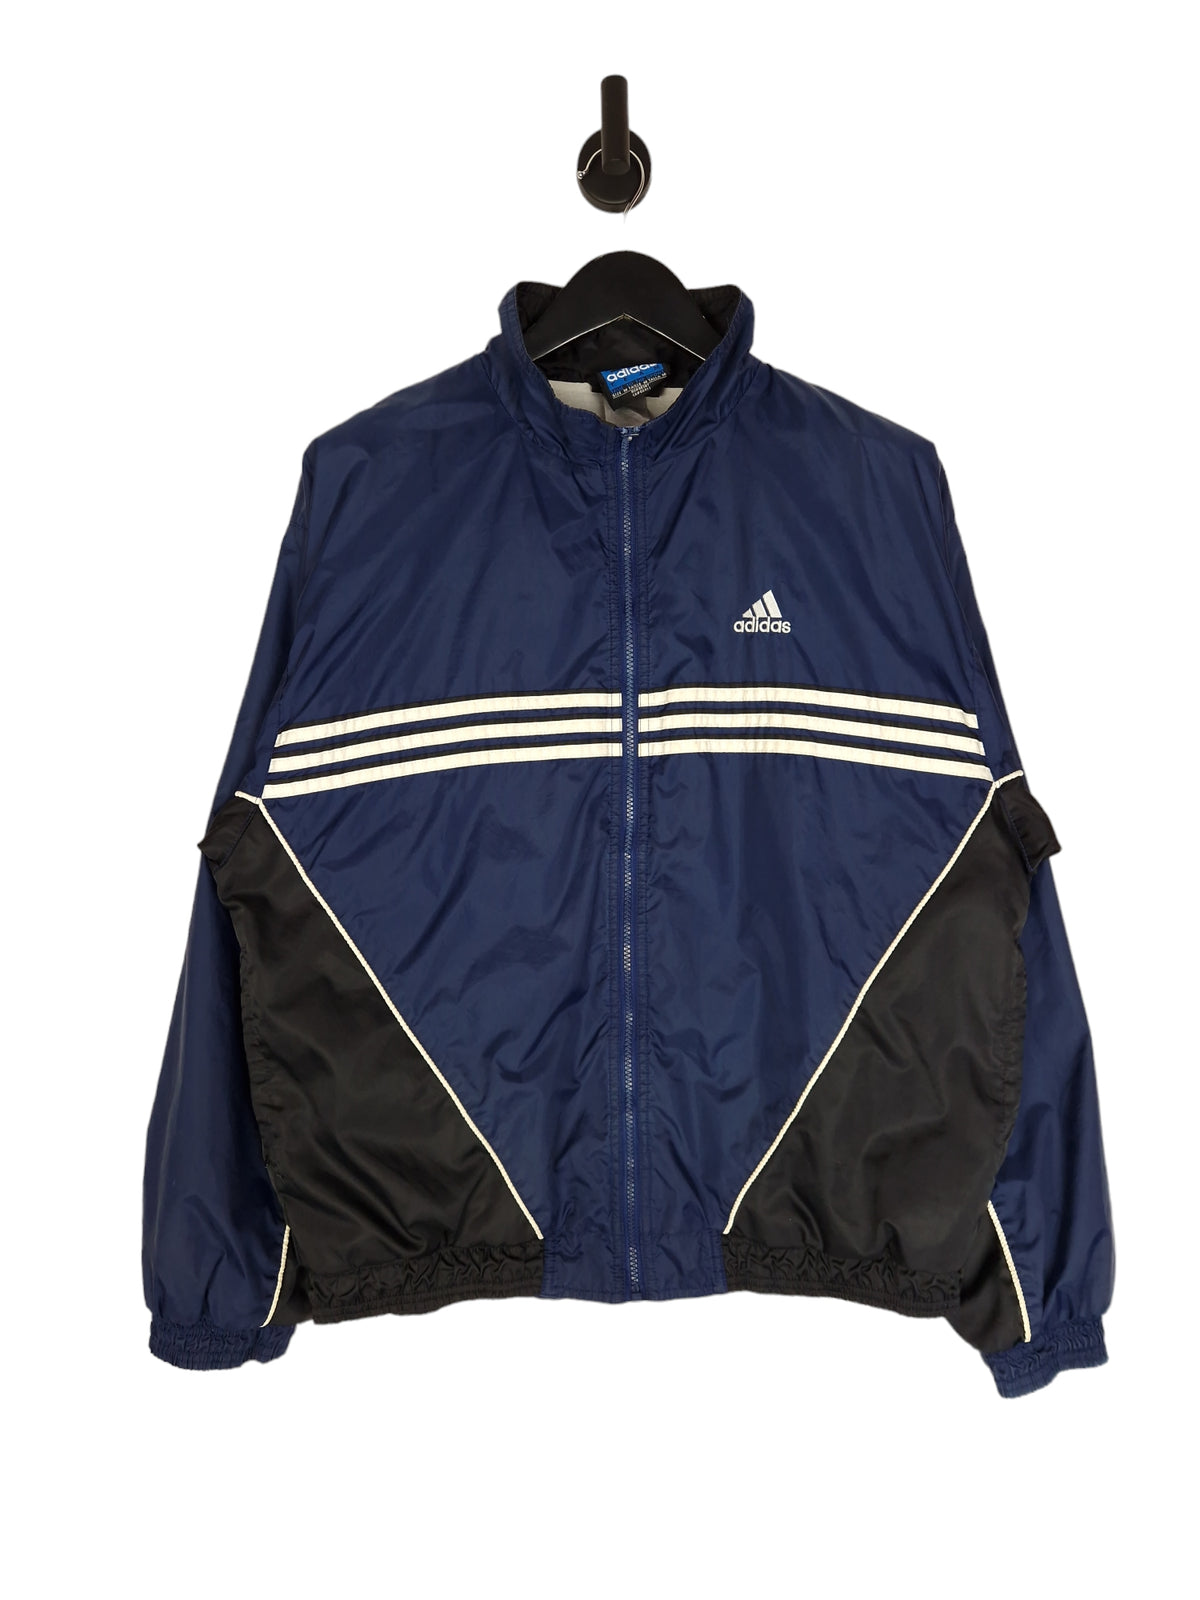 Adidas Windbreaker Jacket - Size M/L